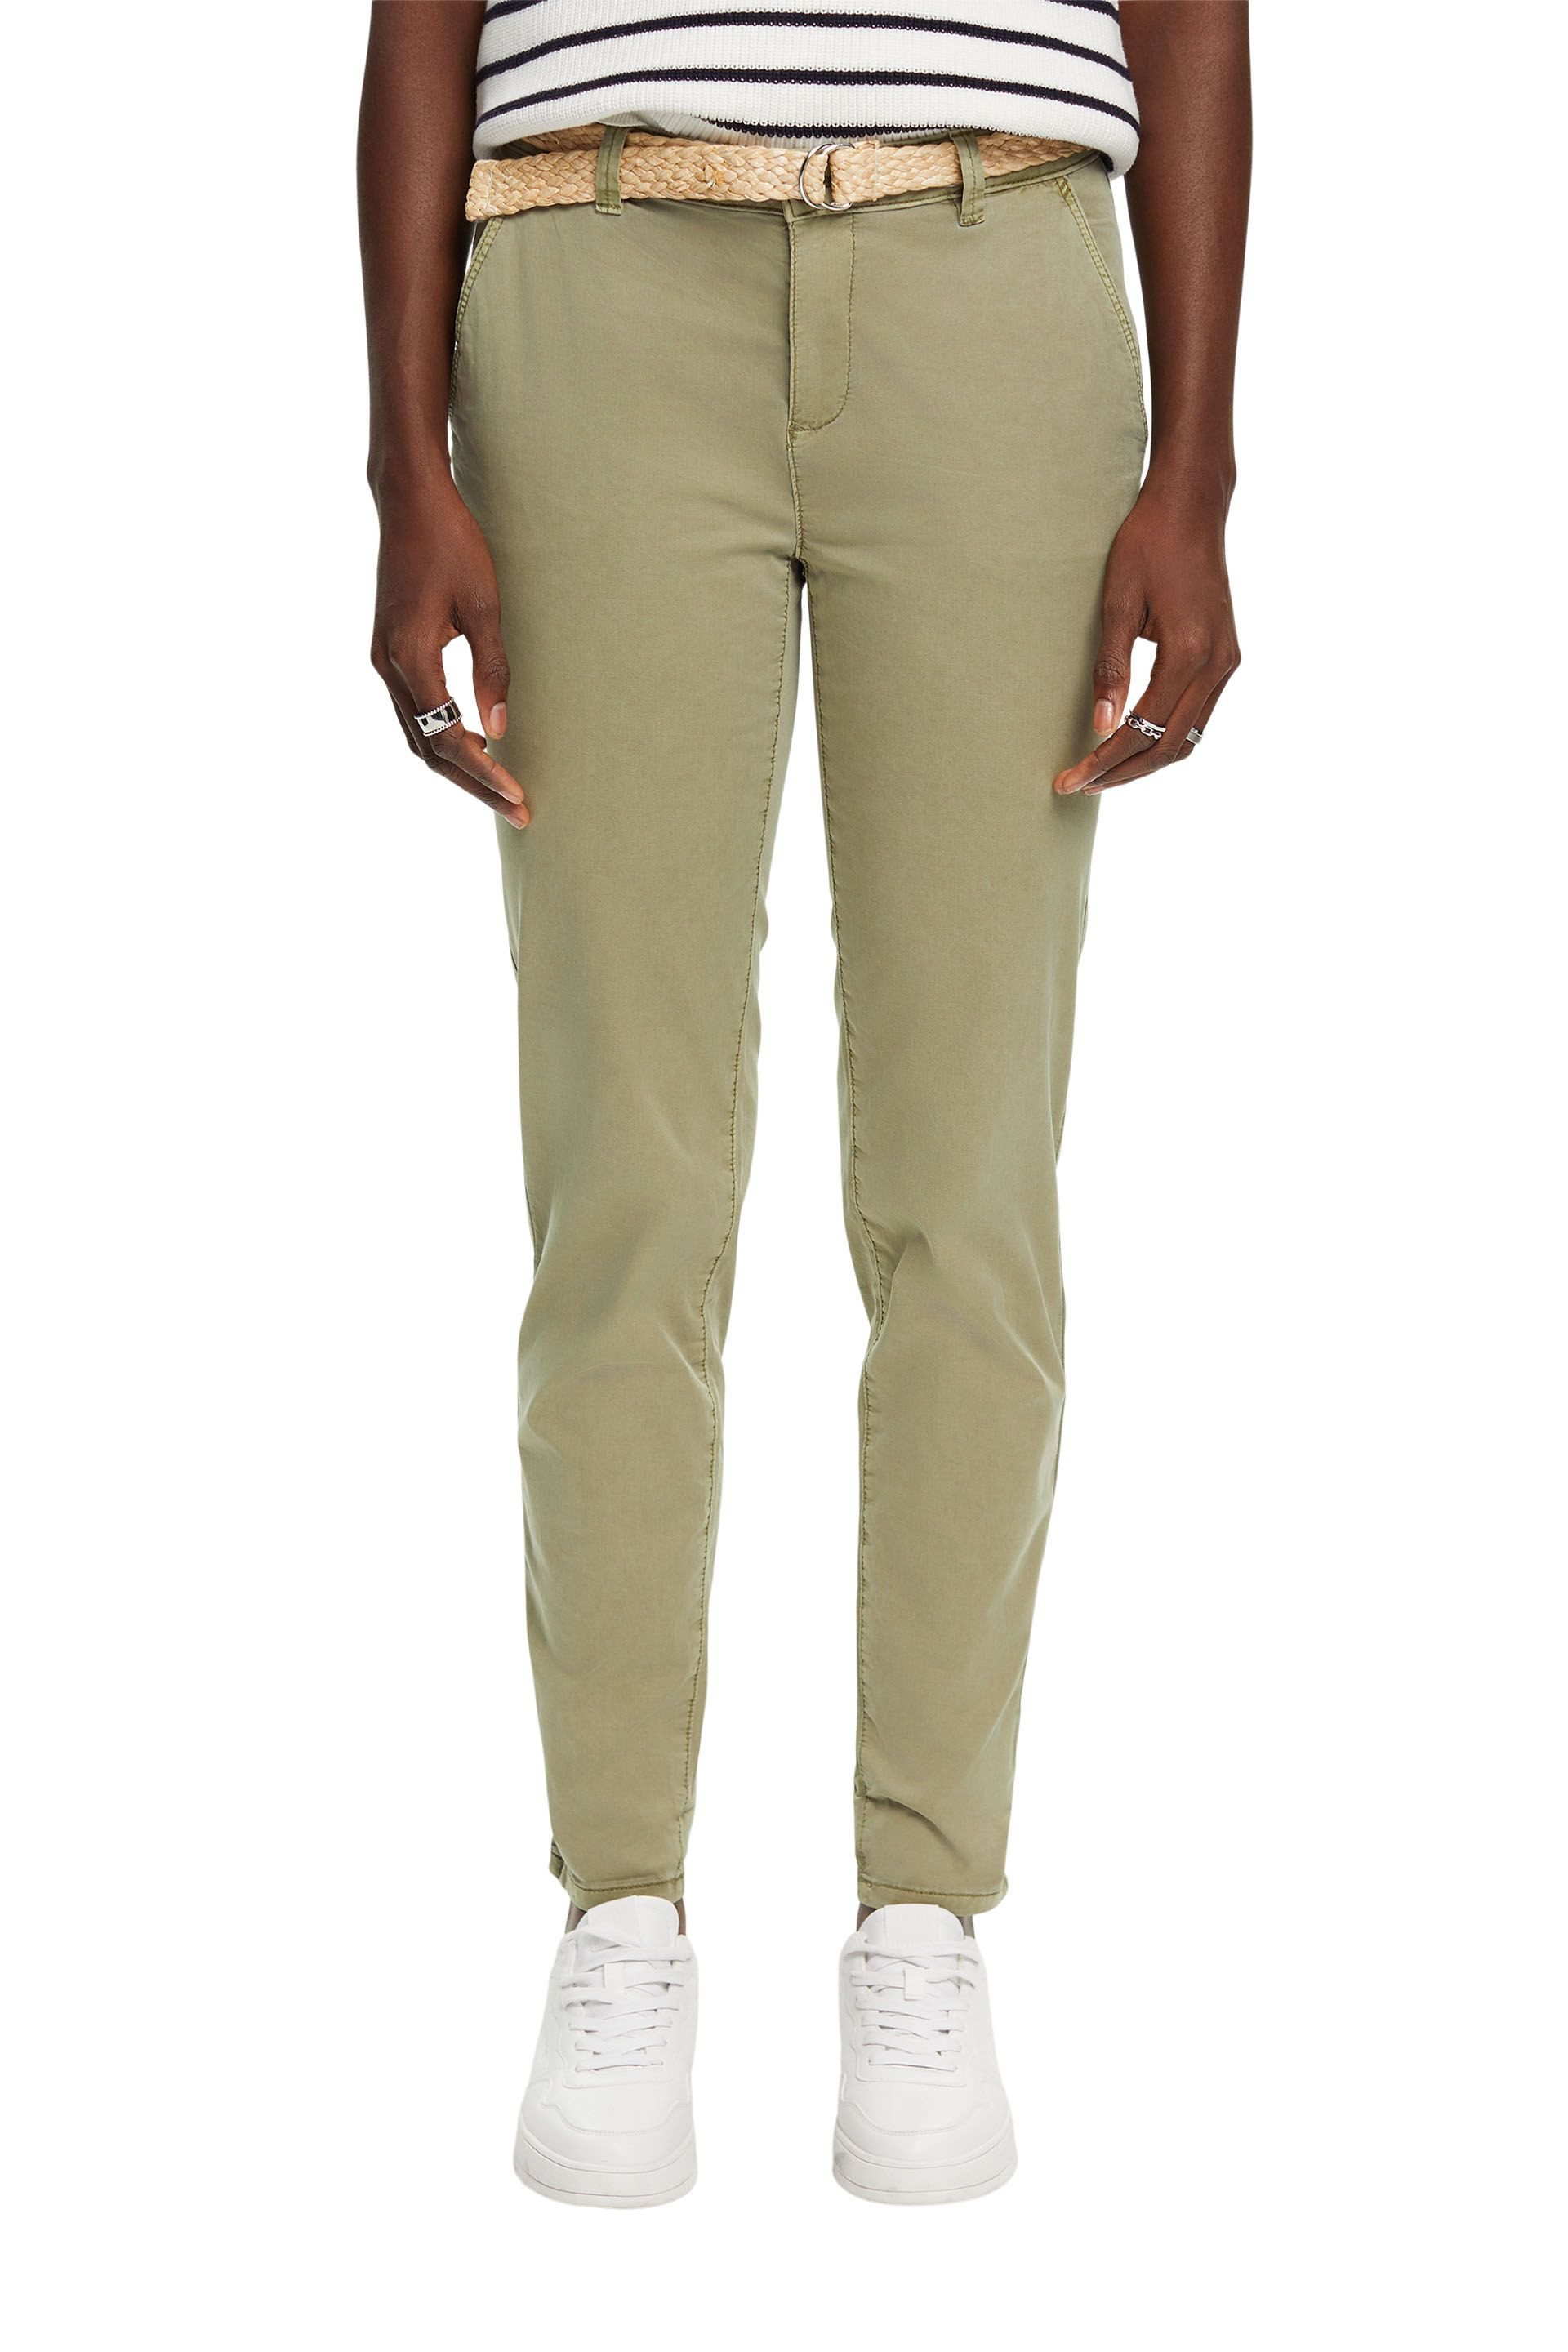 Esprit - Pantaloni chino cropped con cintura, Verde salvia, large image number 1